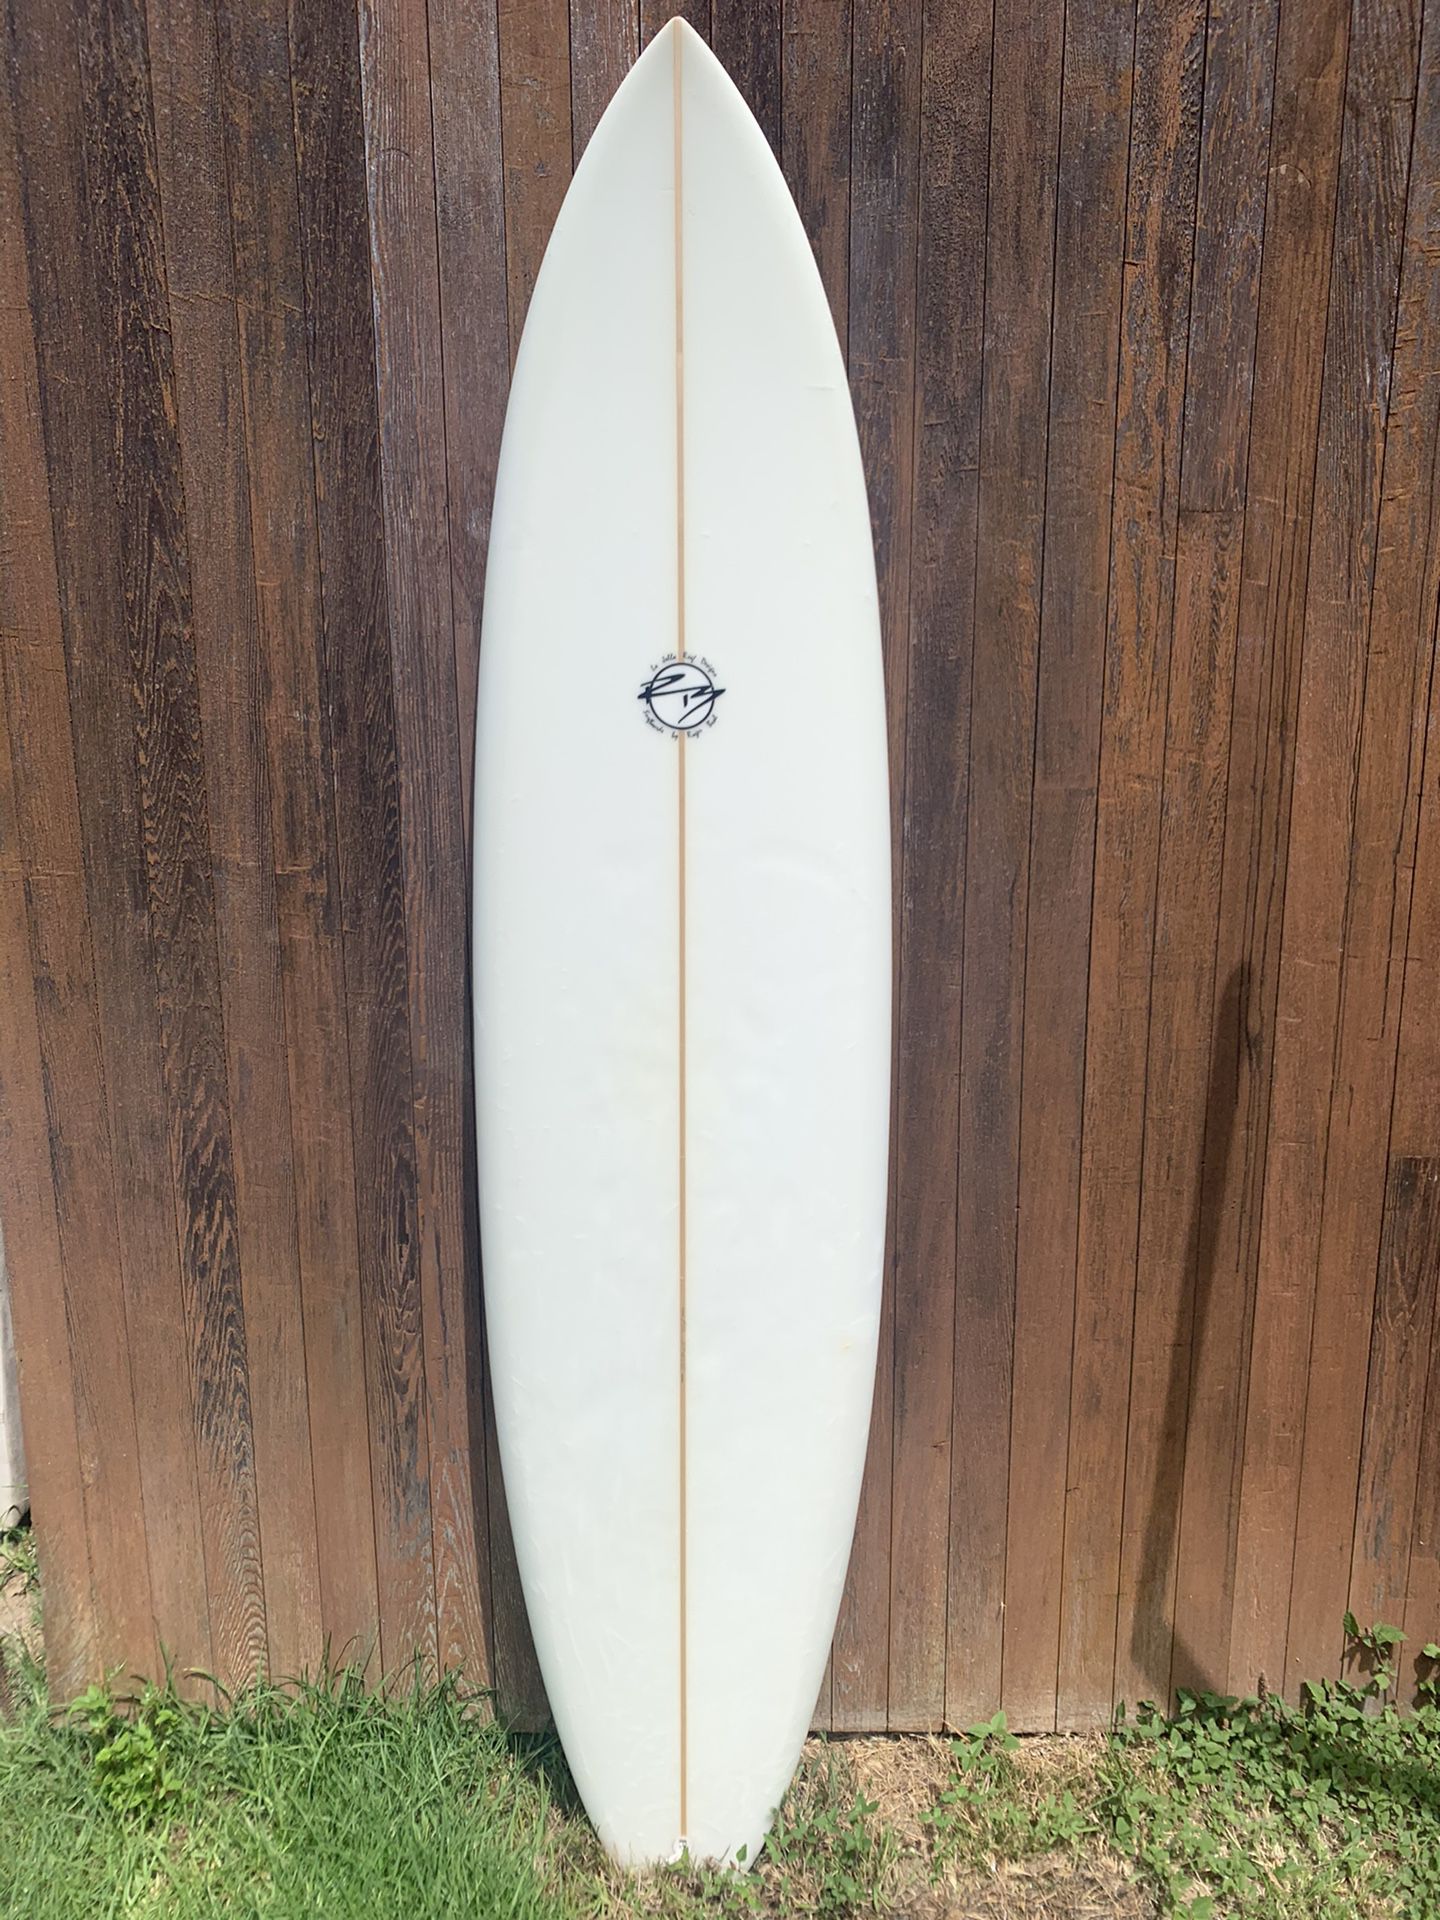 Newly Refurbished 7’8” Surfboard